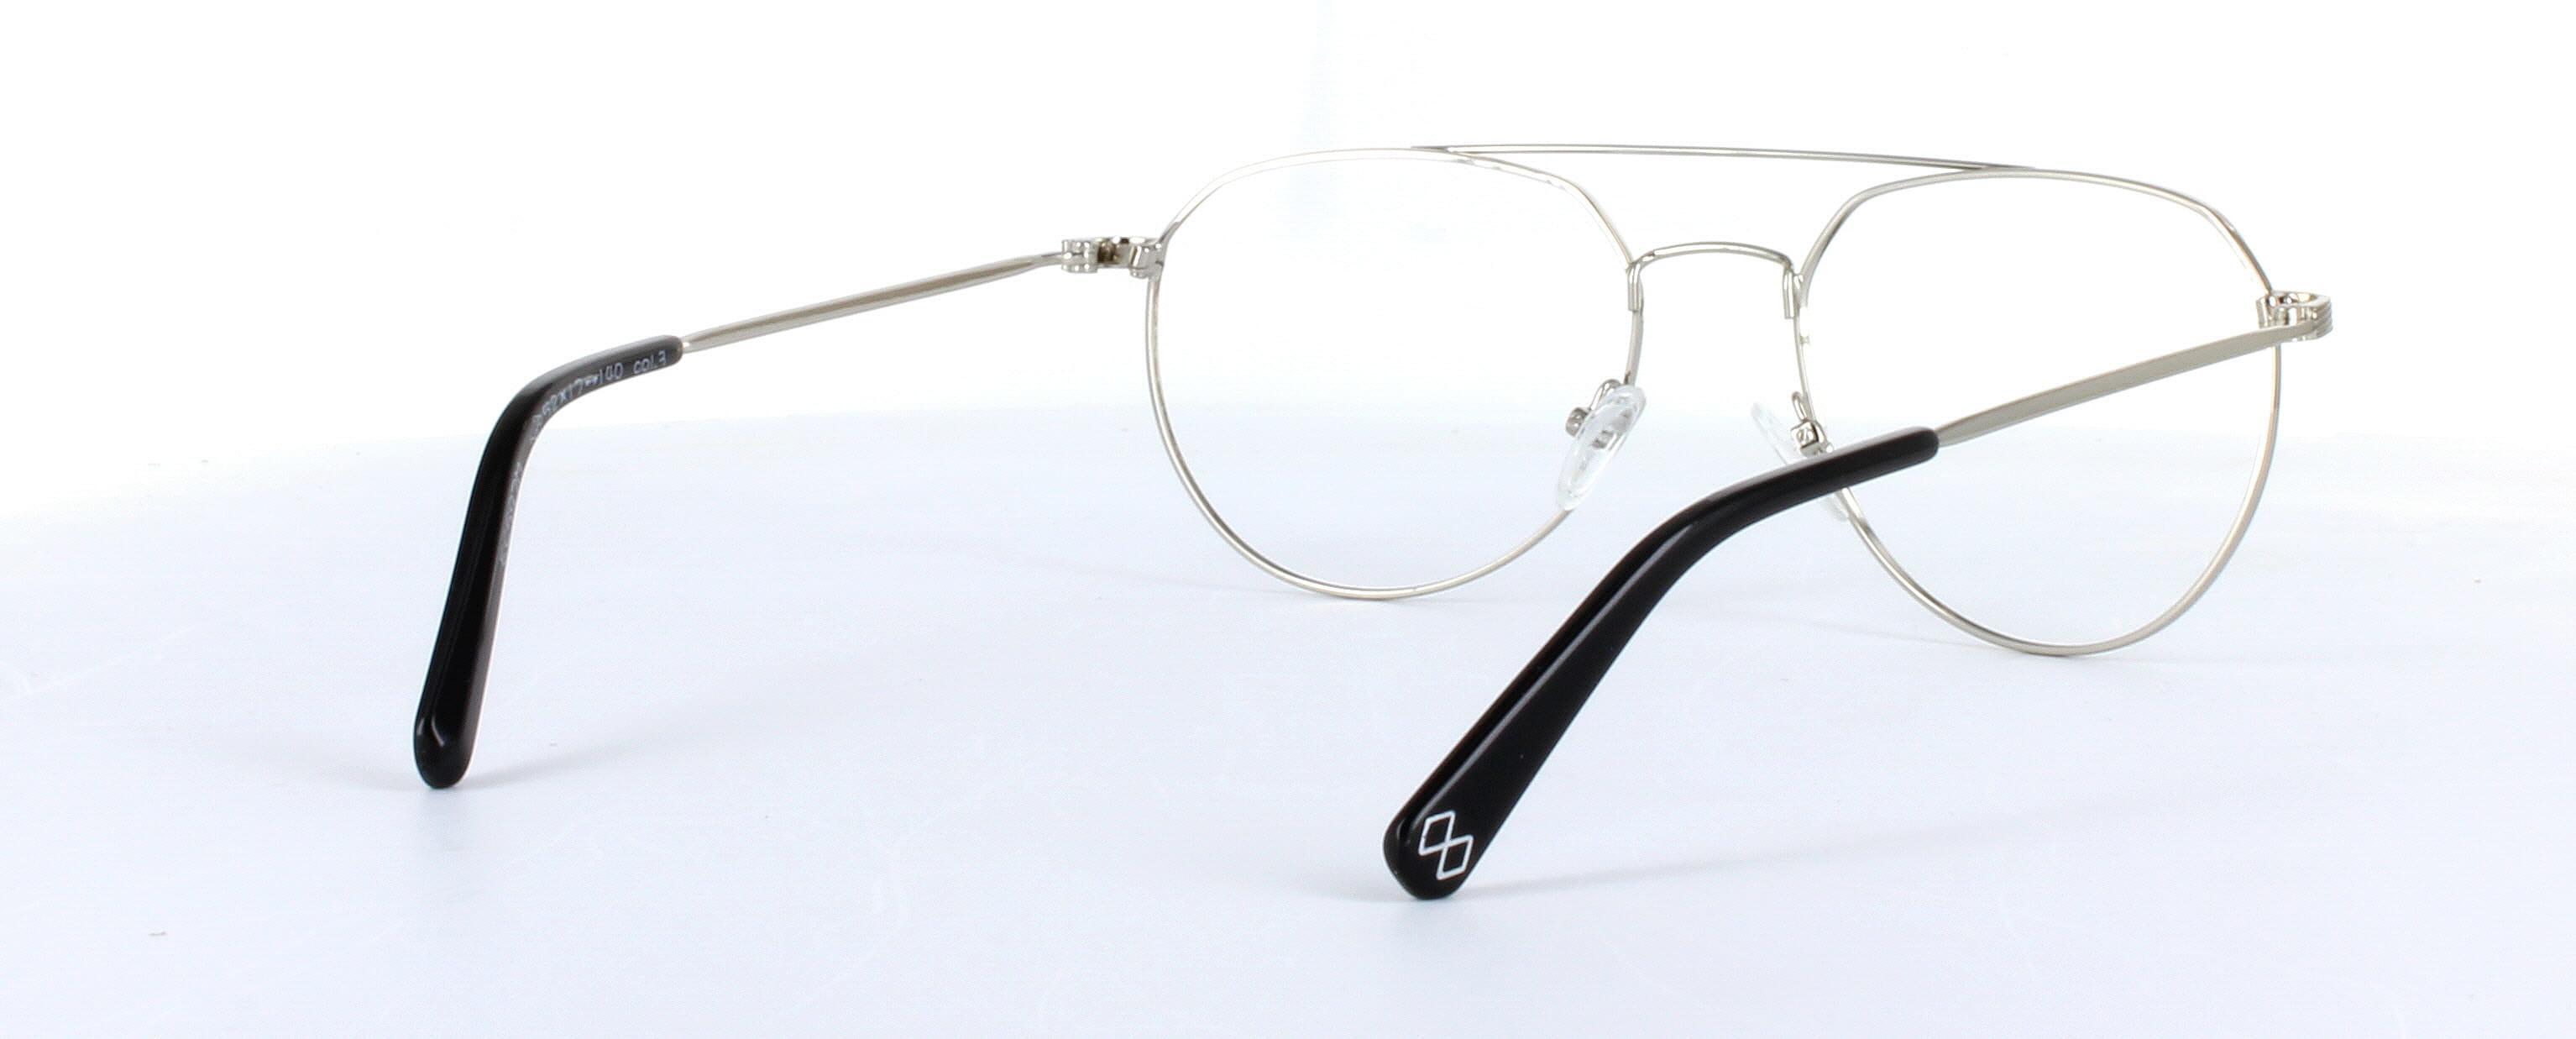 Eyecroxx 597-C3 Black and Gunmetal Full Rim Aviator Metal Glasses - Image View 4